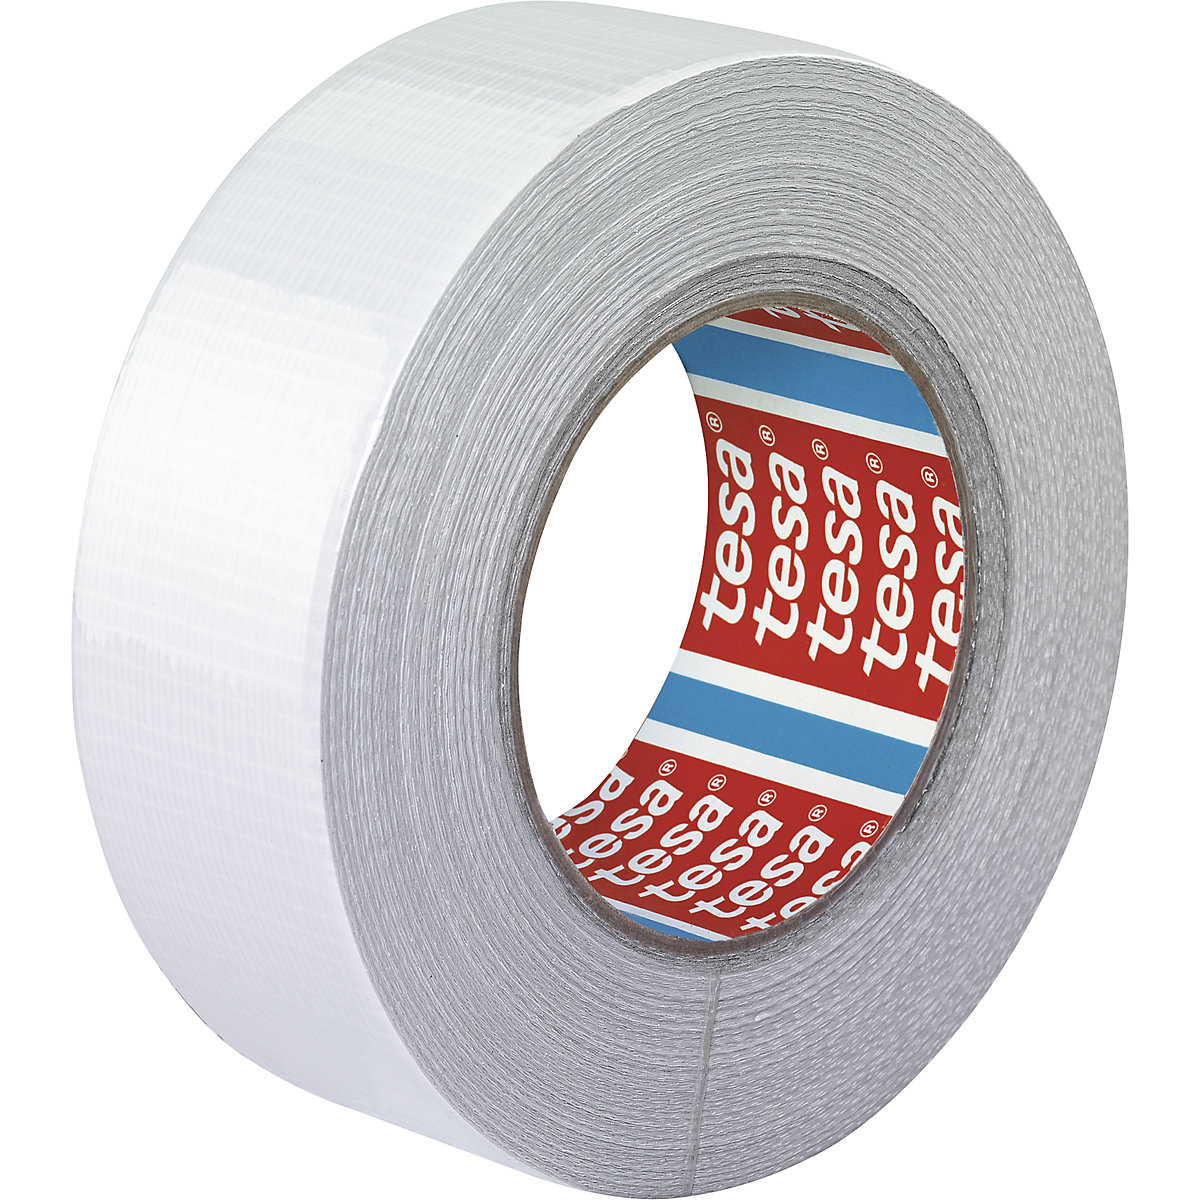 Fabric tape – tesa, tesa® 4662 stone tape, pack of 24 rolls, white, tape width 48 mm-1